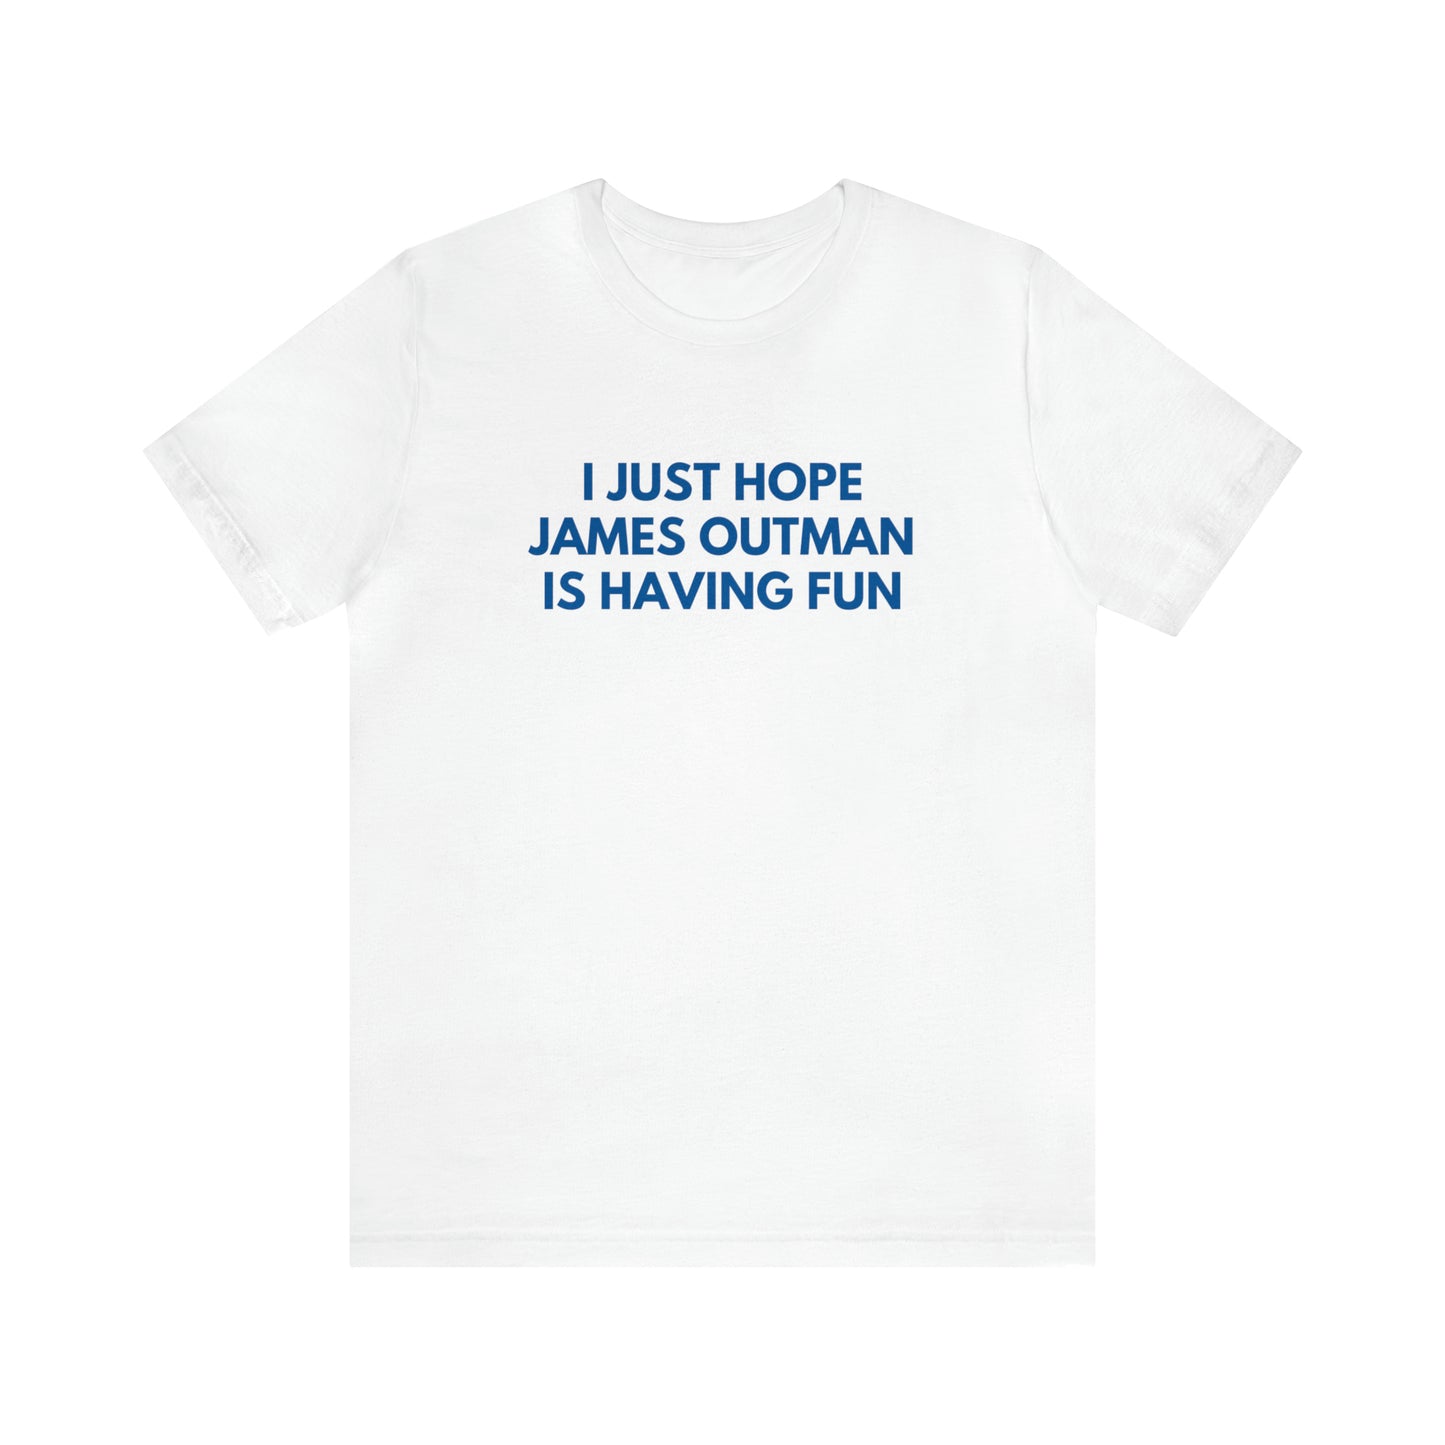 James Outman Having Fun - Unisex T-shirt